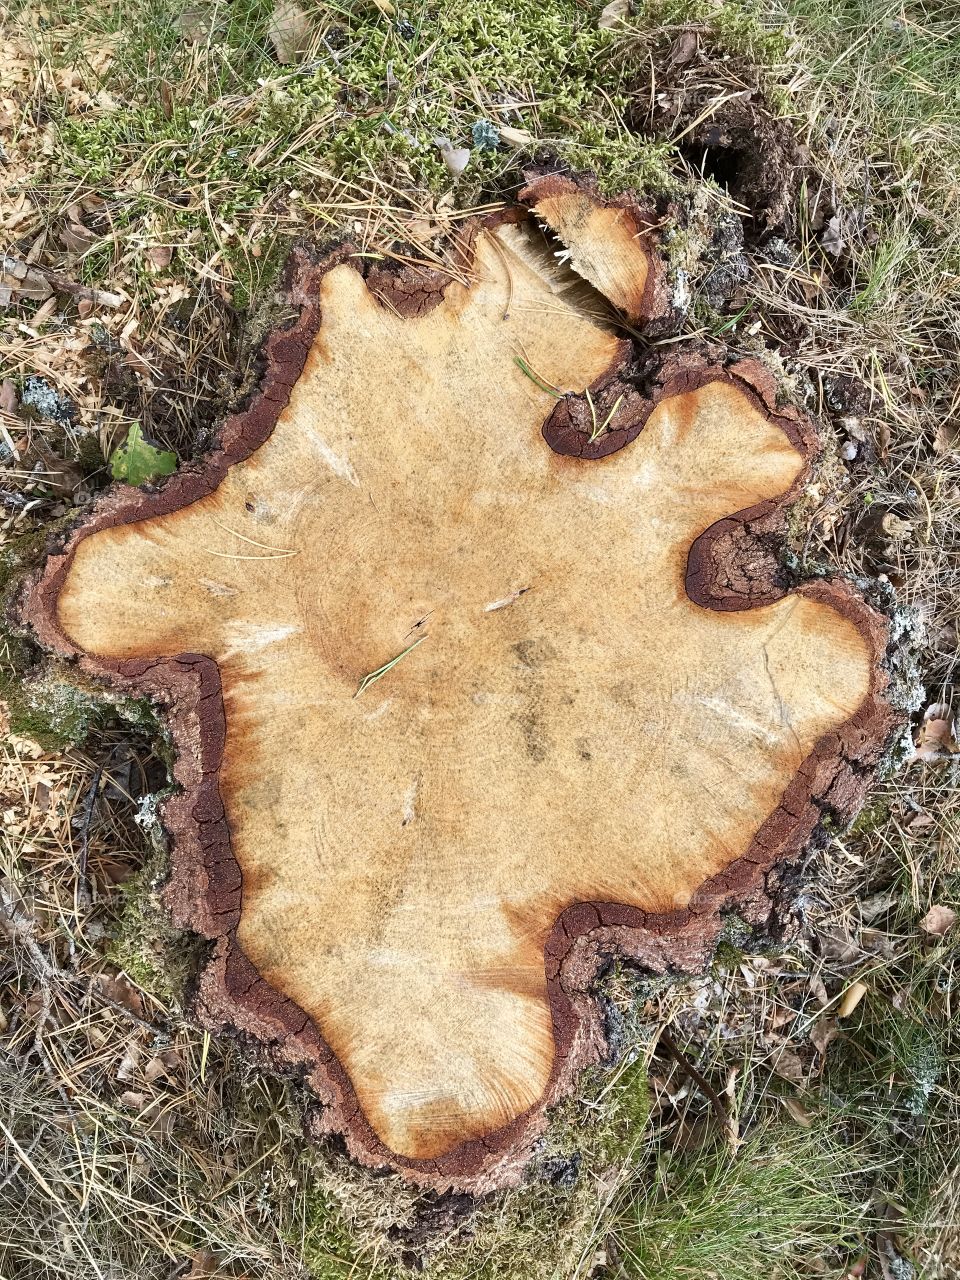 Sawed off tree stump